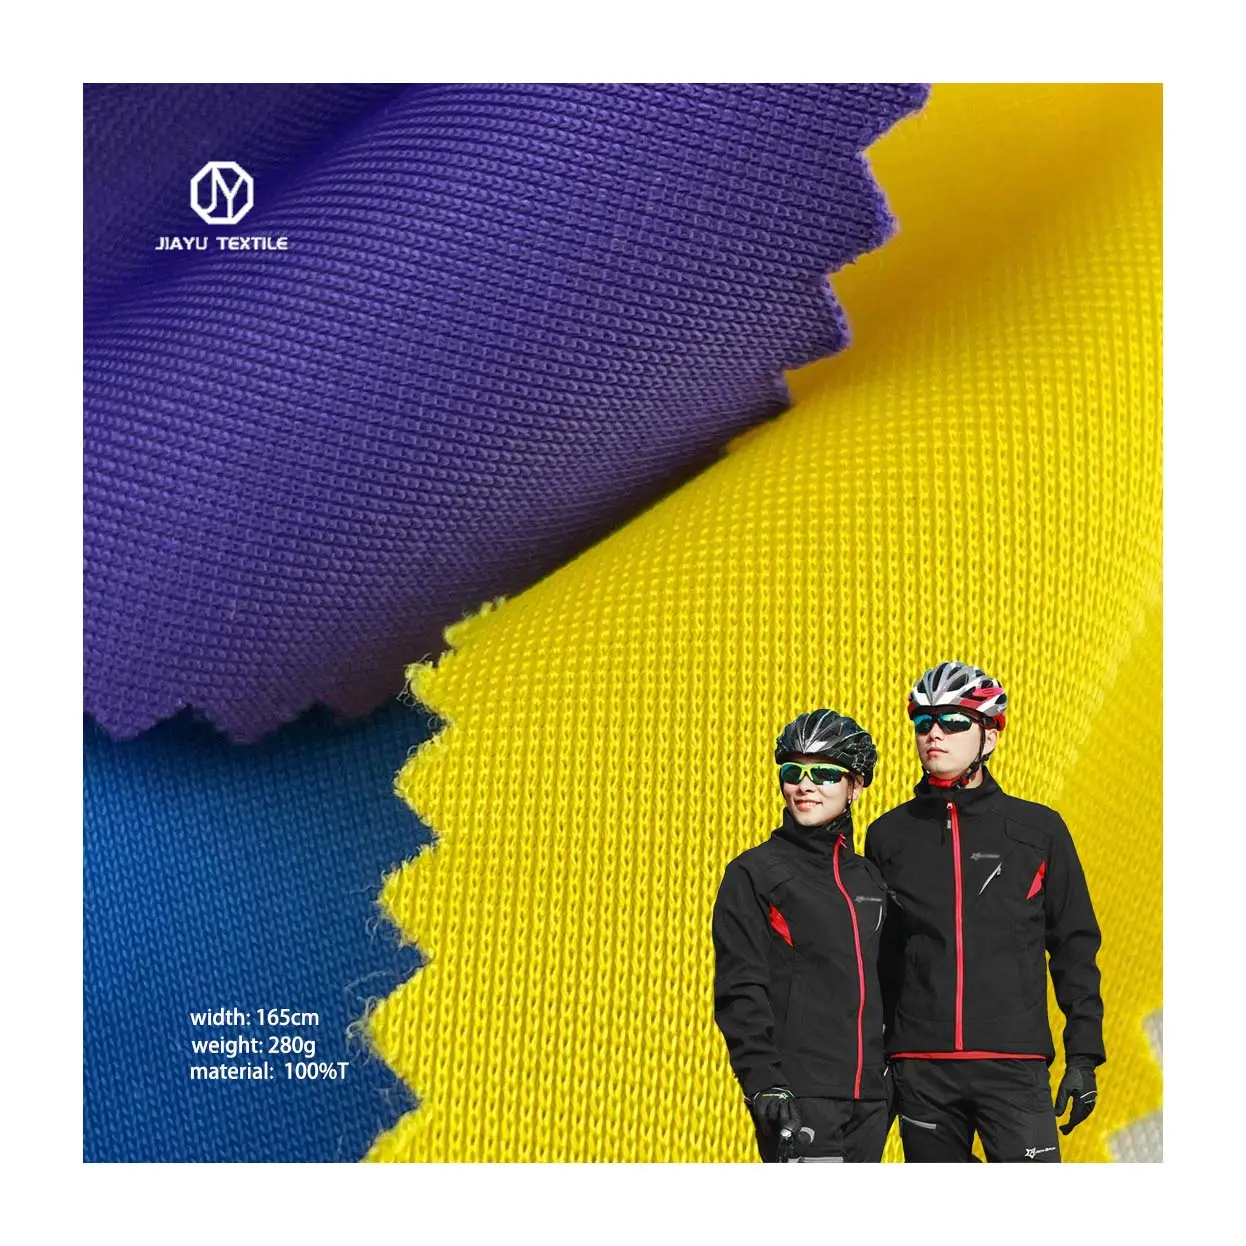 Jiayu Textile 280g thickened knitted fleece single jacket outdoor sportswear fabric cycling uniform school uniform fitness wear